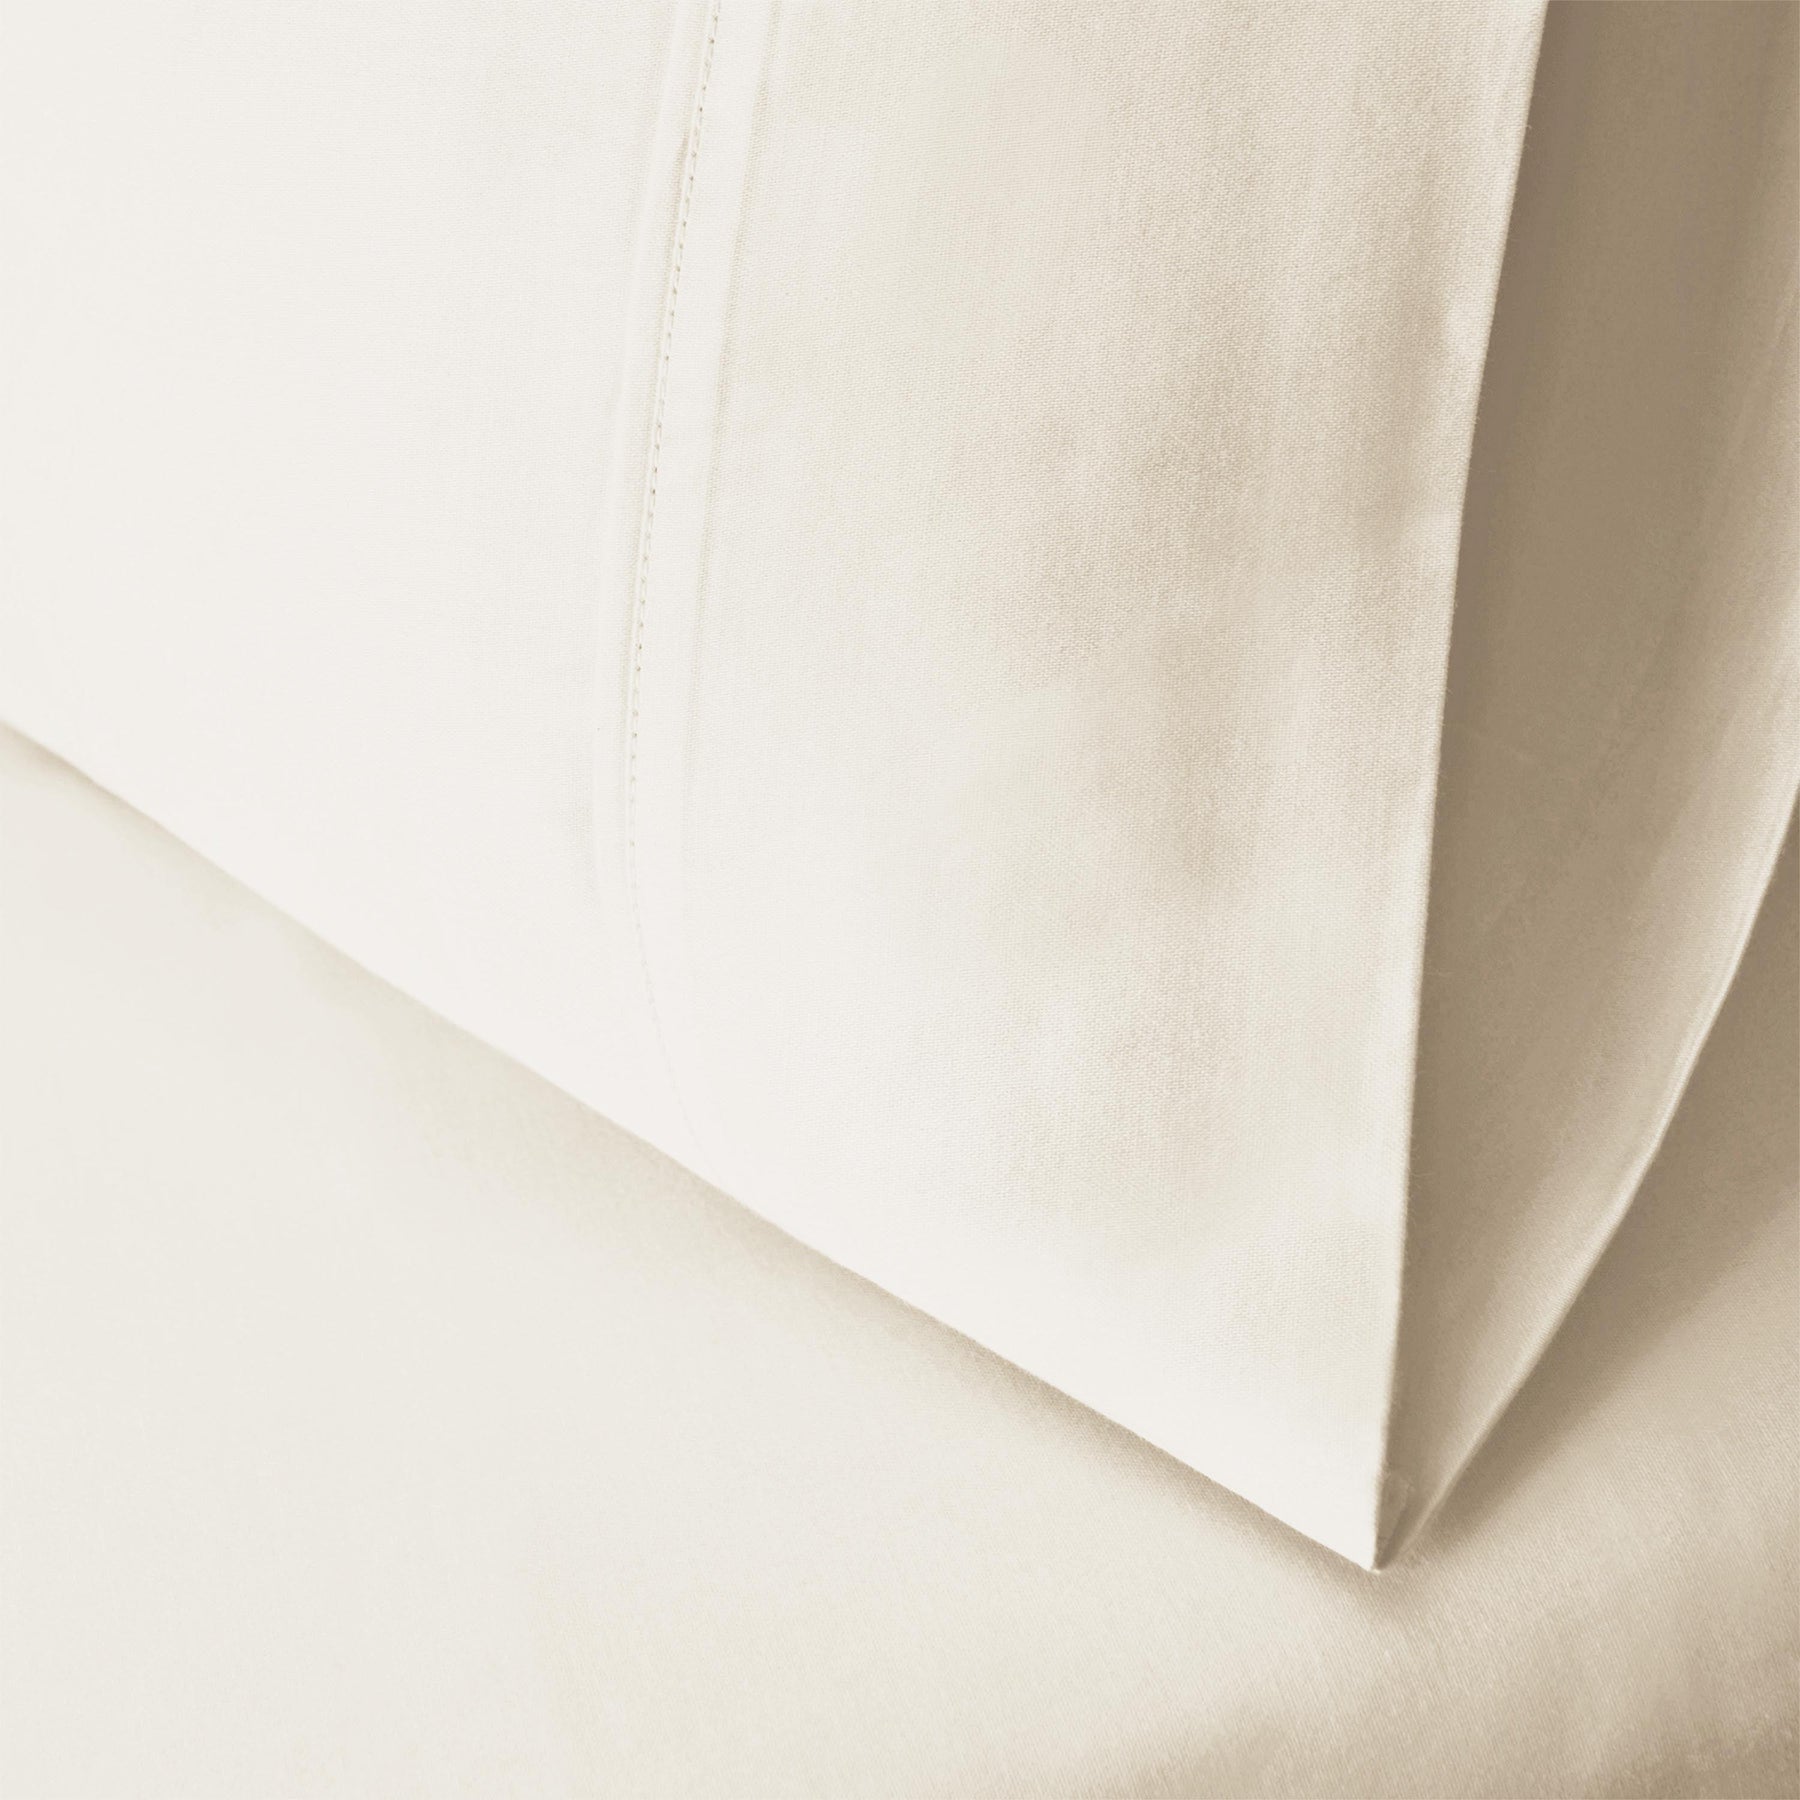  Superior Solid Cotton Blend Pillowcase Set - Ivory